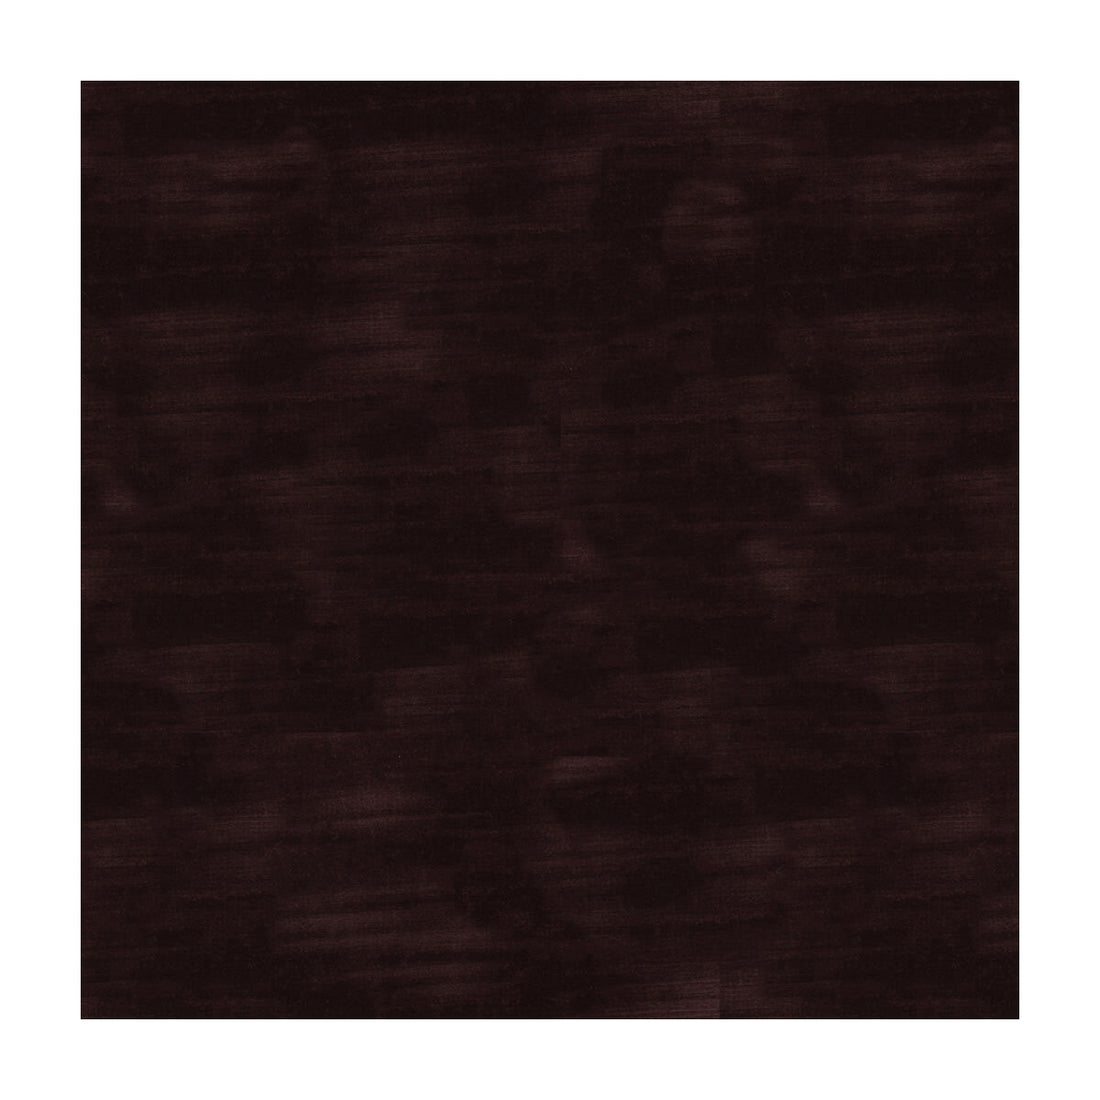 Lazare Velvet fabric in eggplant color - pattern 8016103.1010.0 - by Brunschwig &amp; Fils